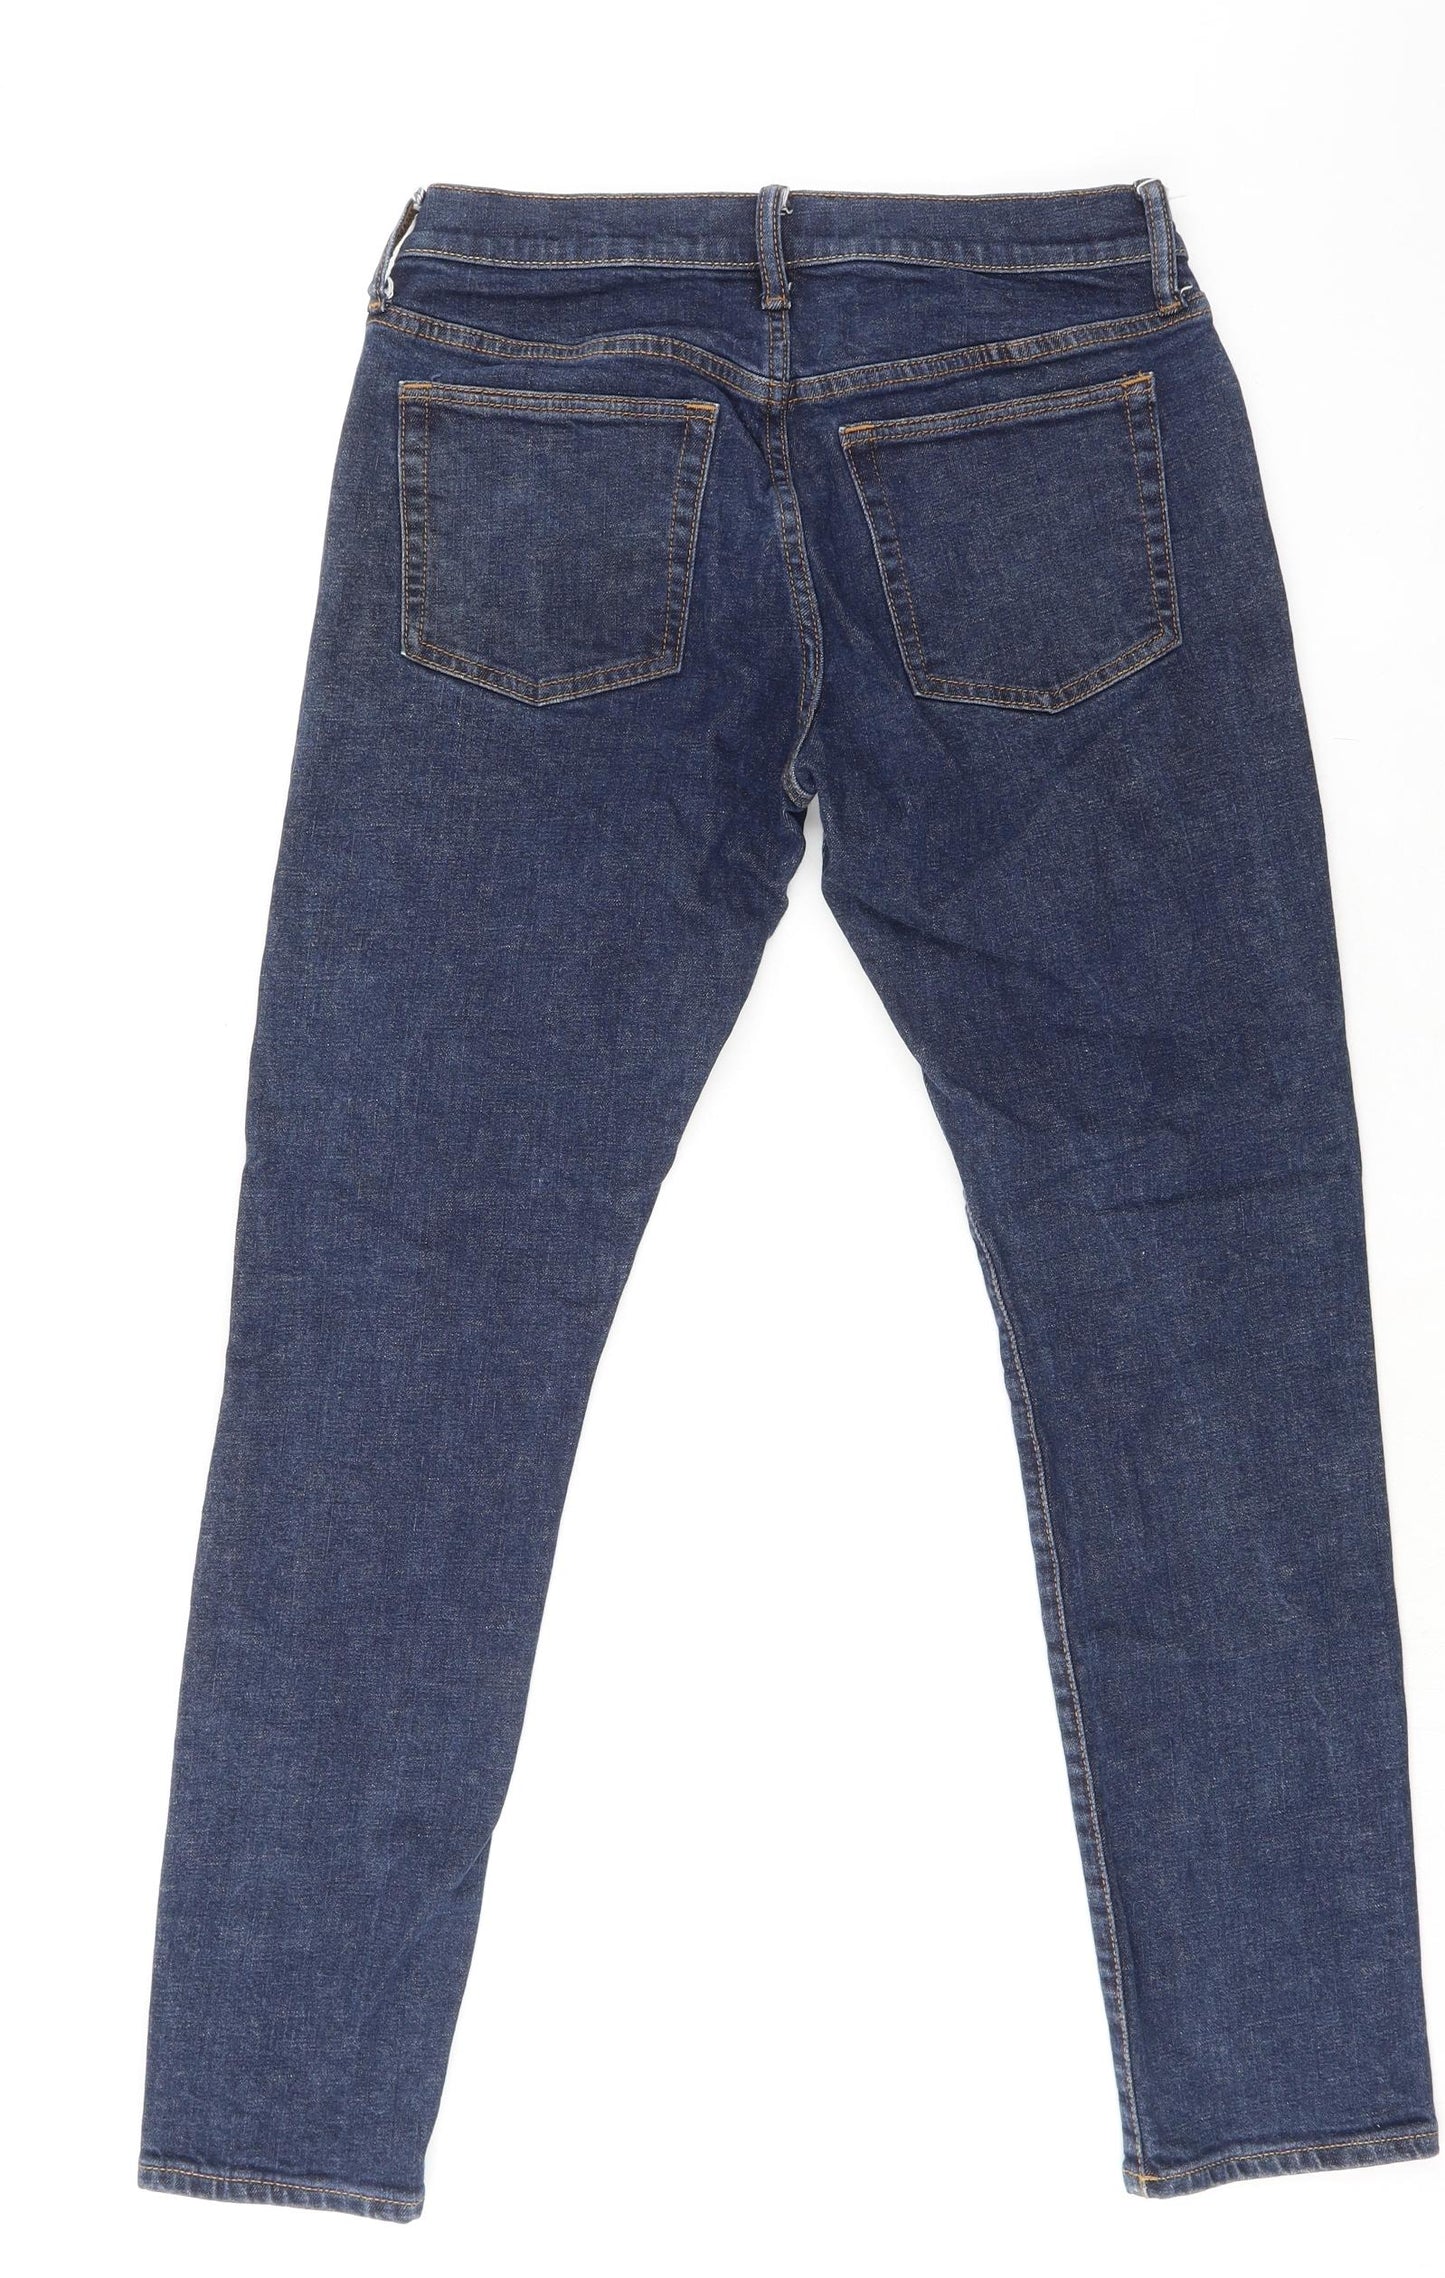 Gap Mens Blue Cotton Skinny Jeans Size 28 in L30 in Regular Zip